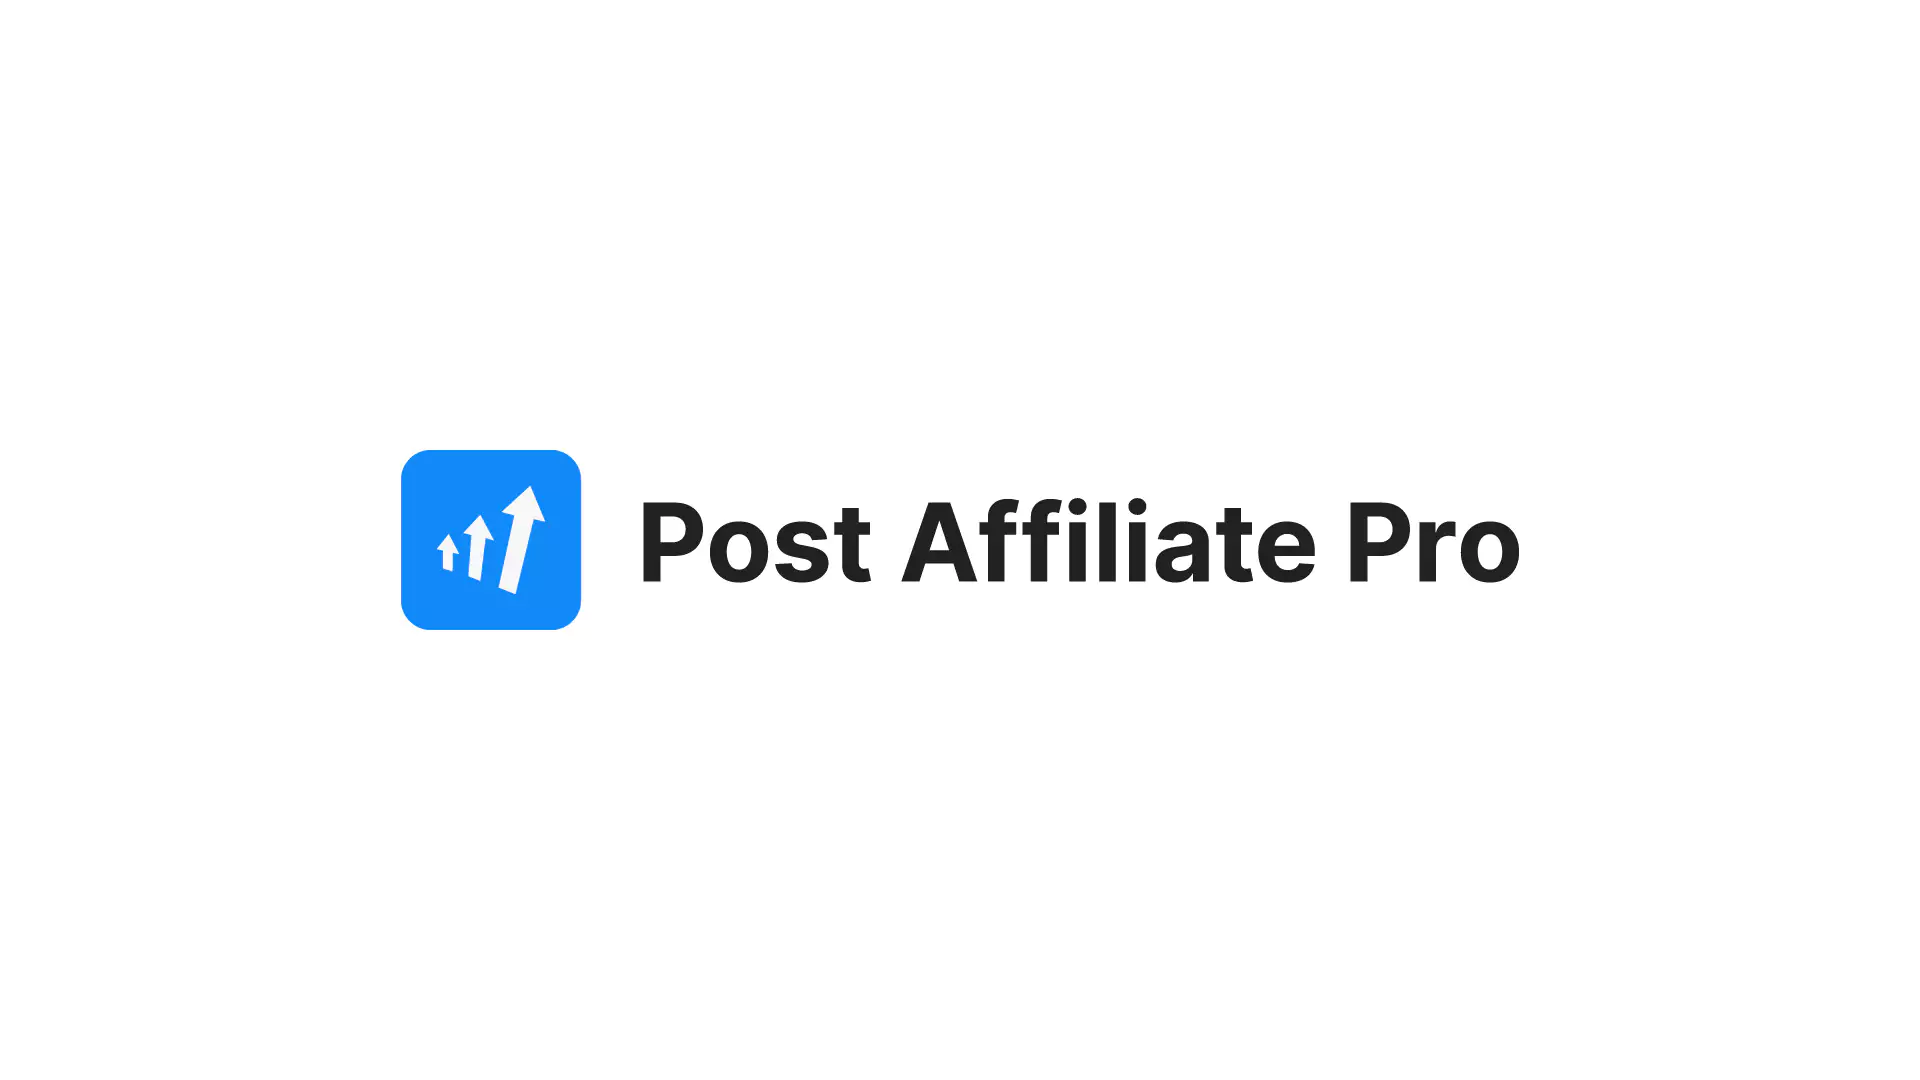 Post Affiliate Pro logo